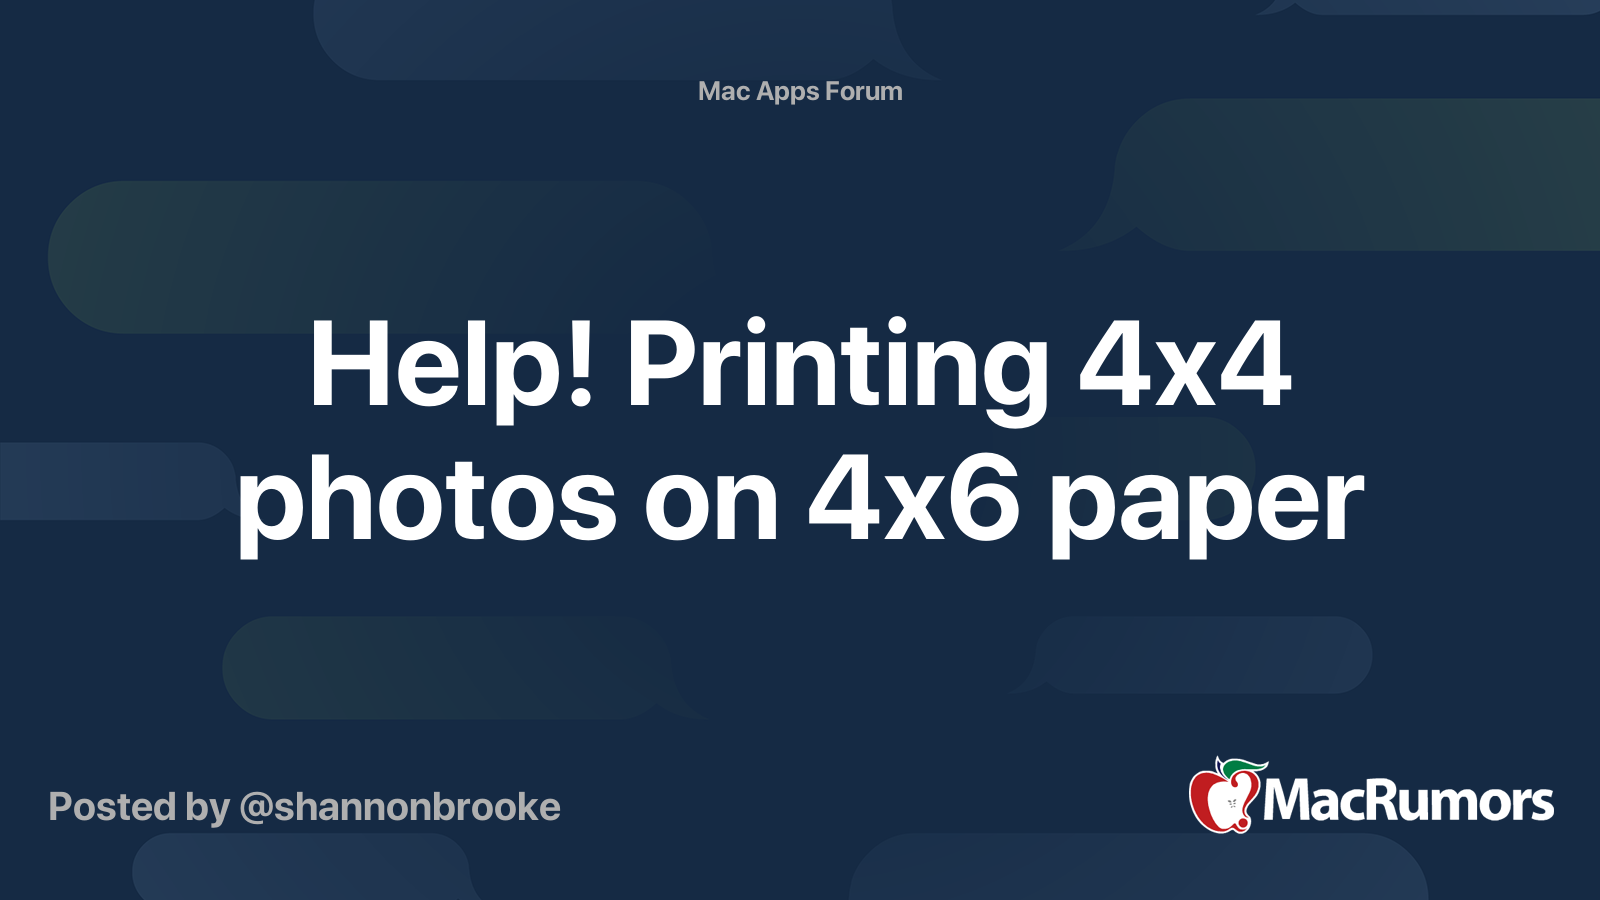 help-printing-4x4-photos-on-4x6-paper-macrumors-forums